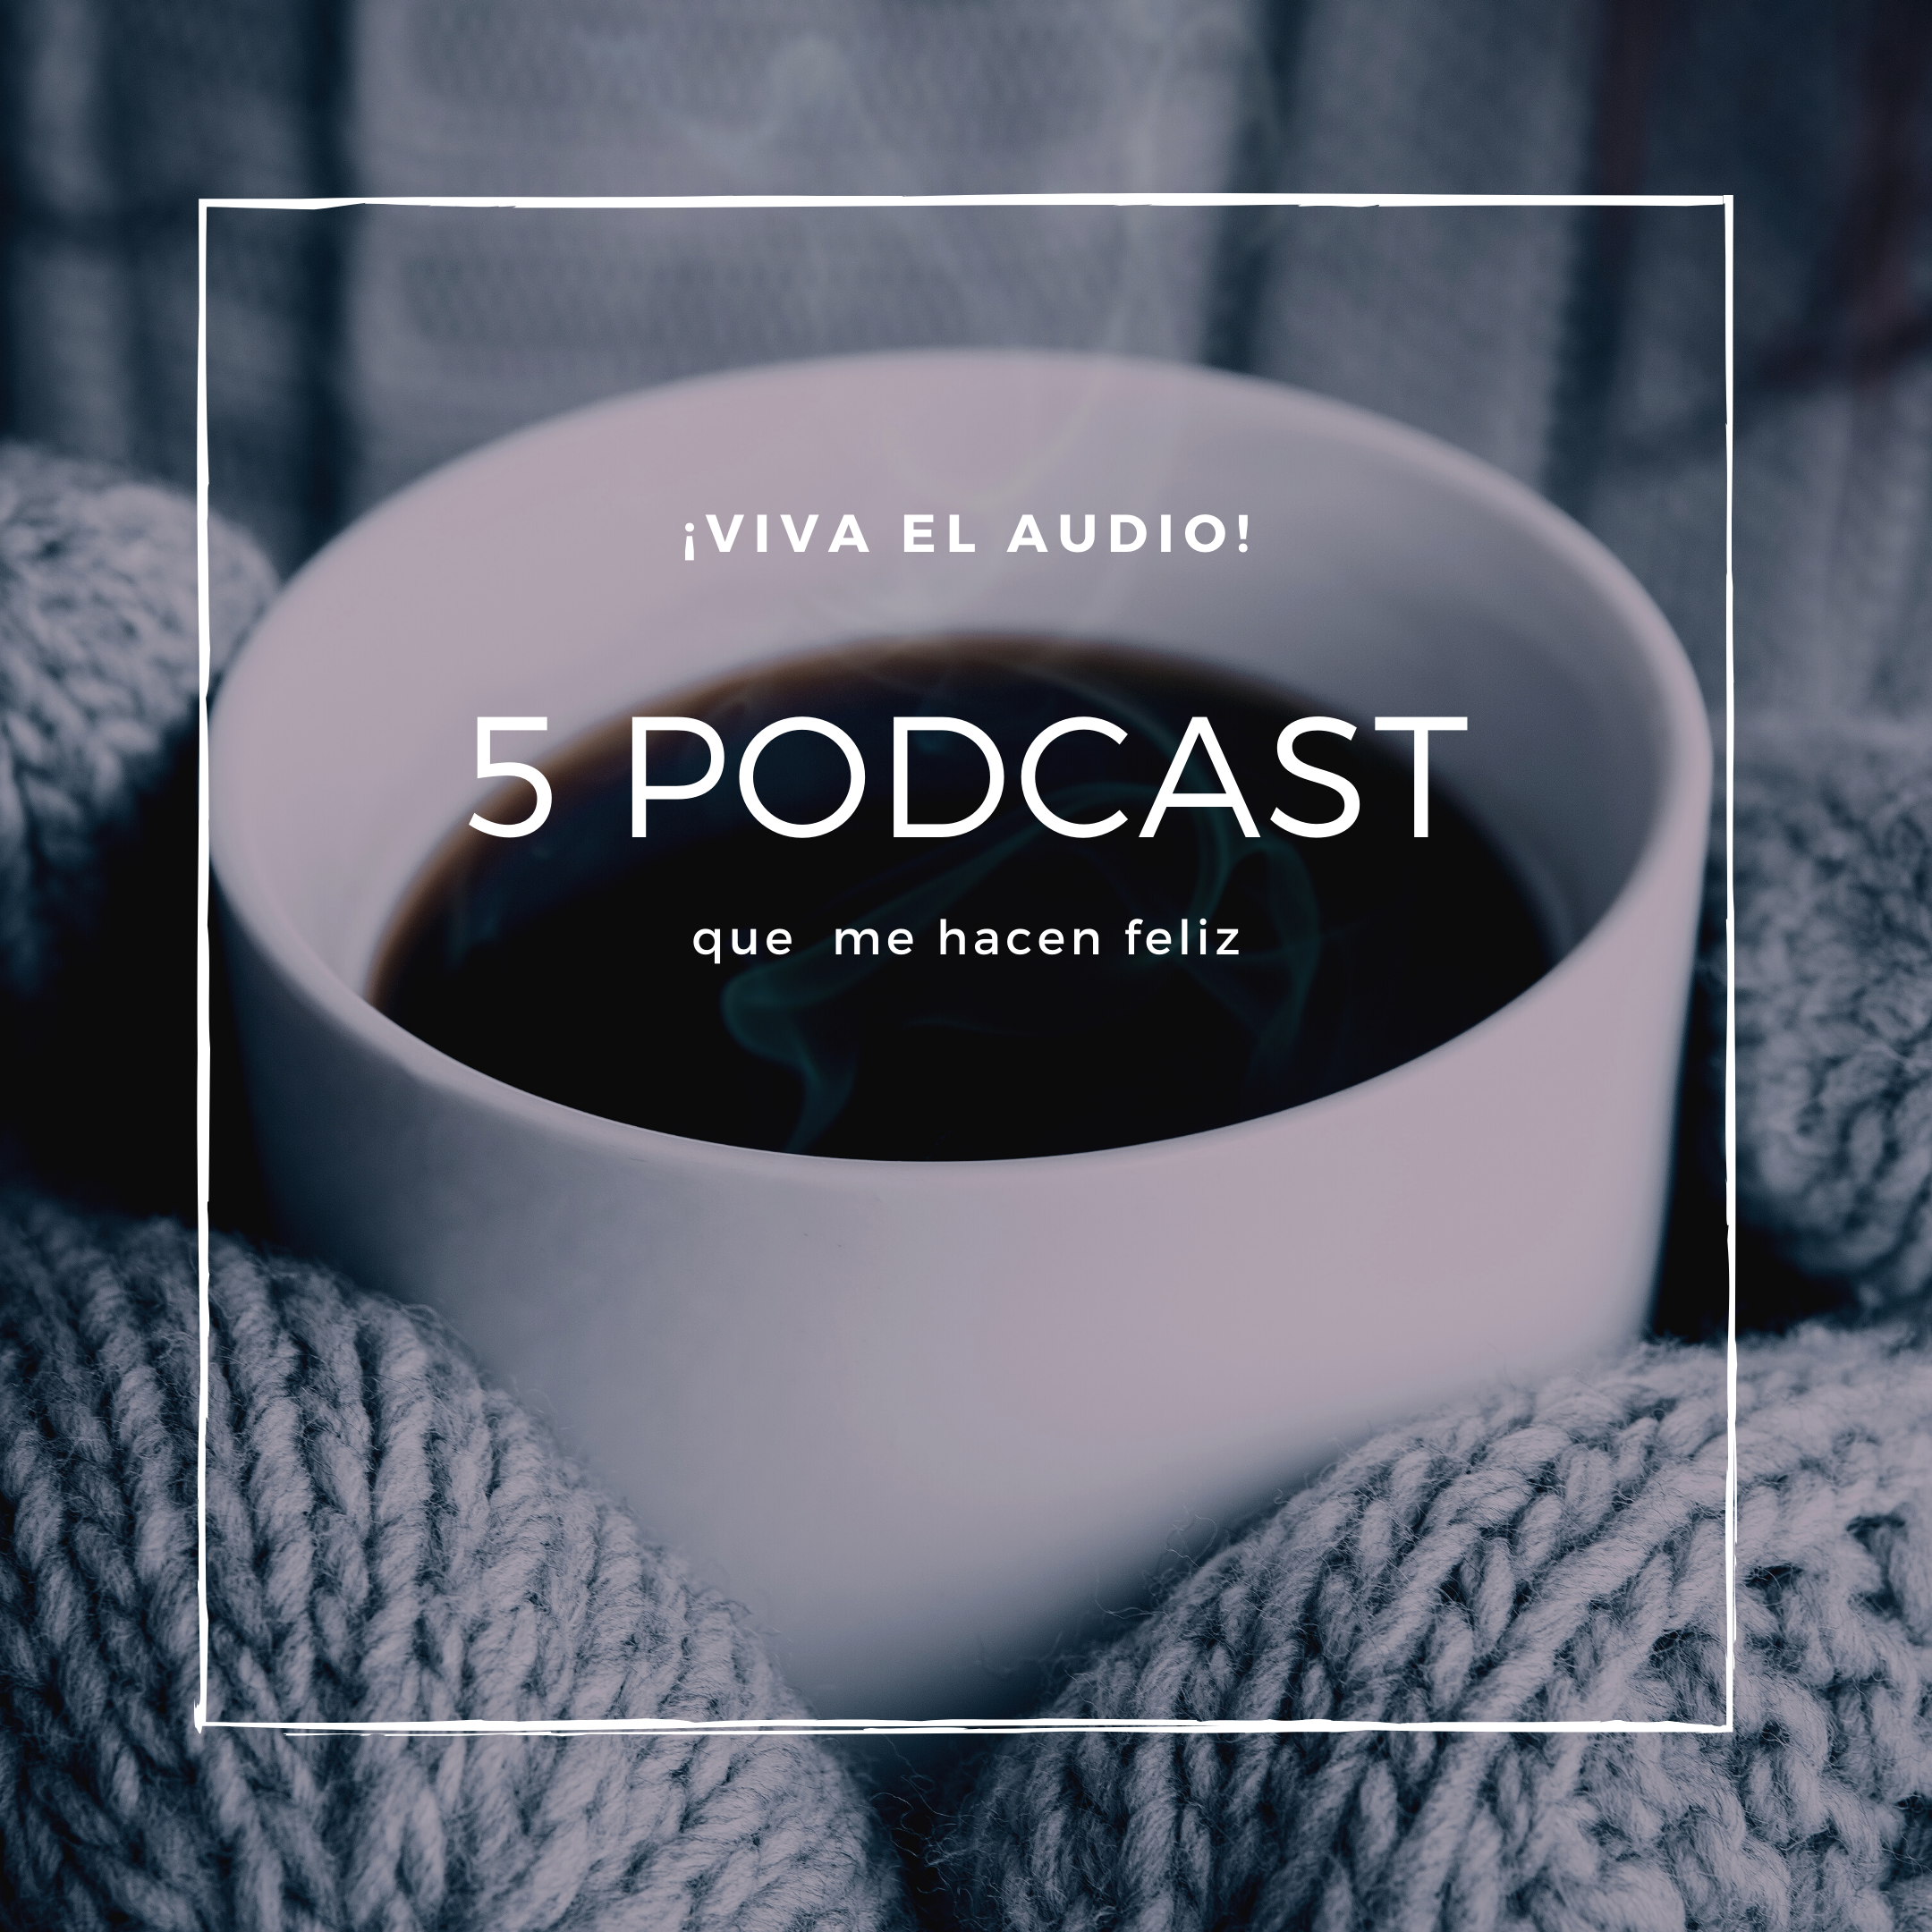 5 podcast que me hacen feliz